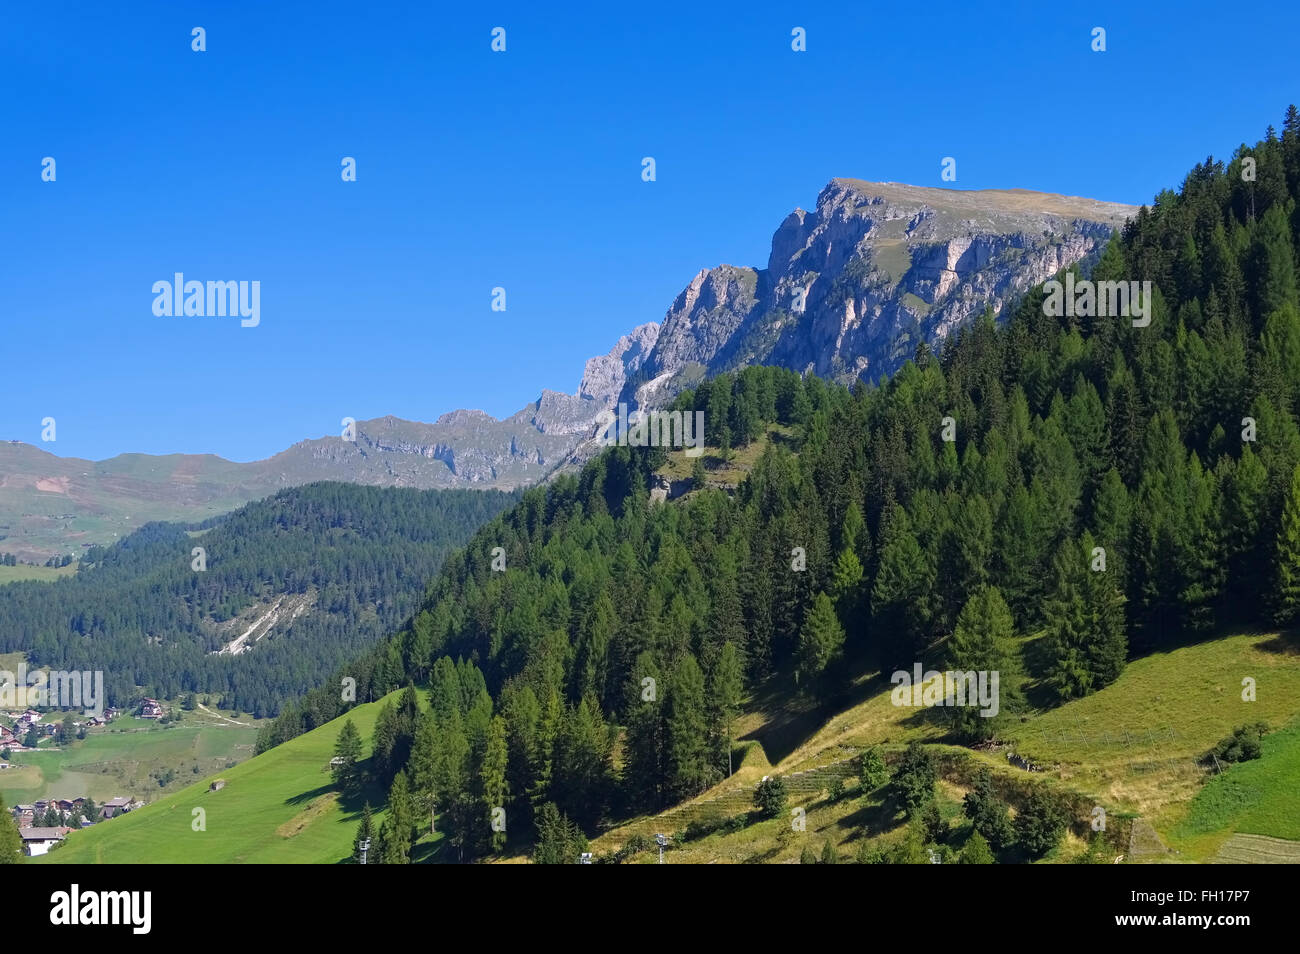 Sellajoch in den Dolomiten, italienische Alpen - Sella pass in Dolomites, italian Alps Stock Photo